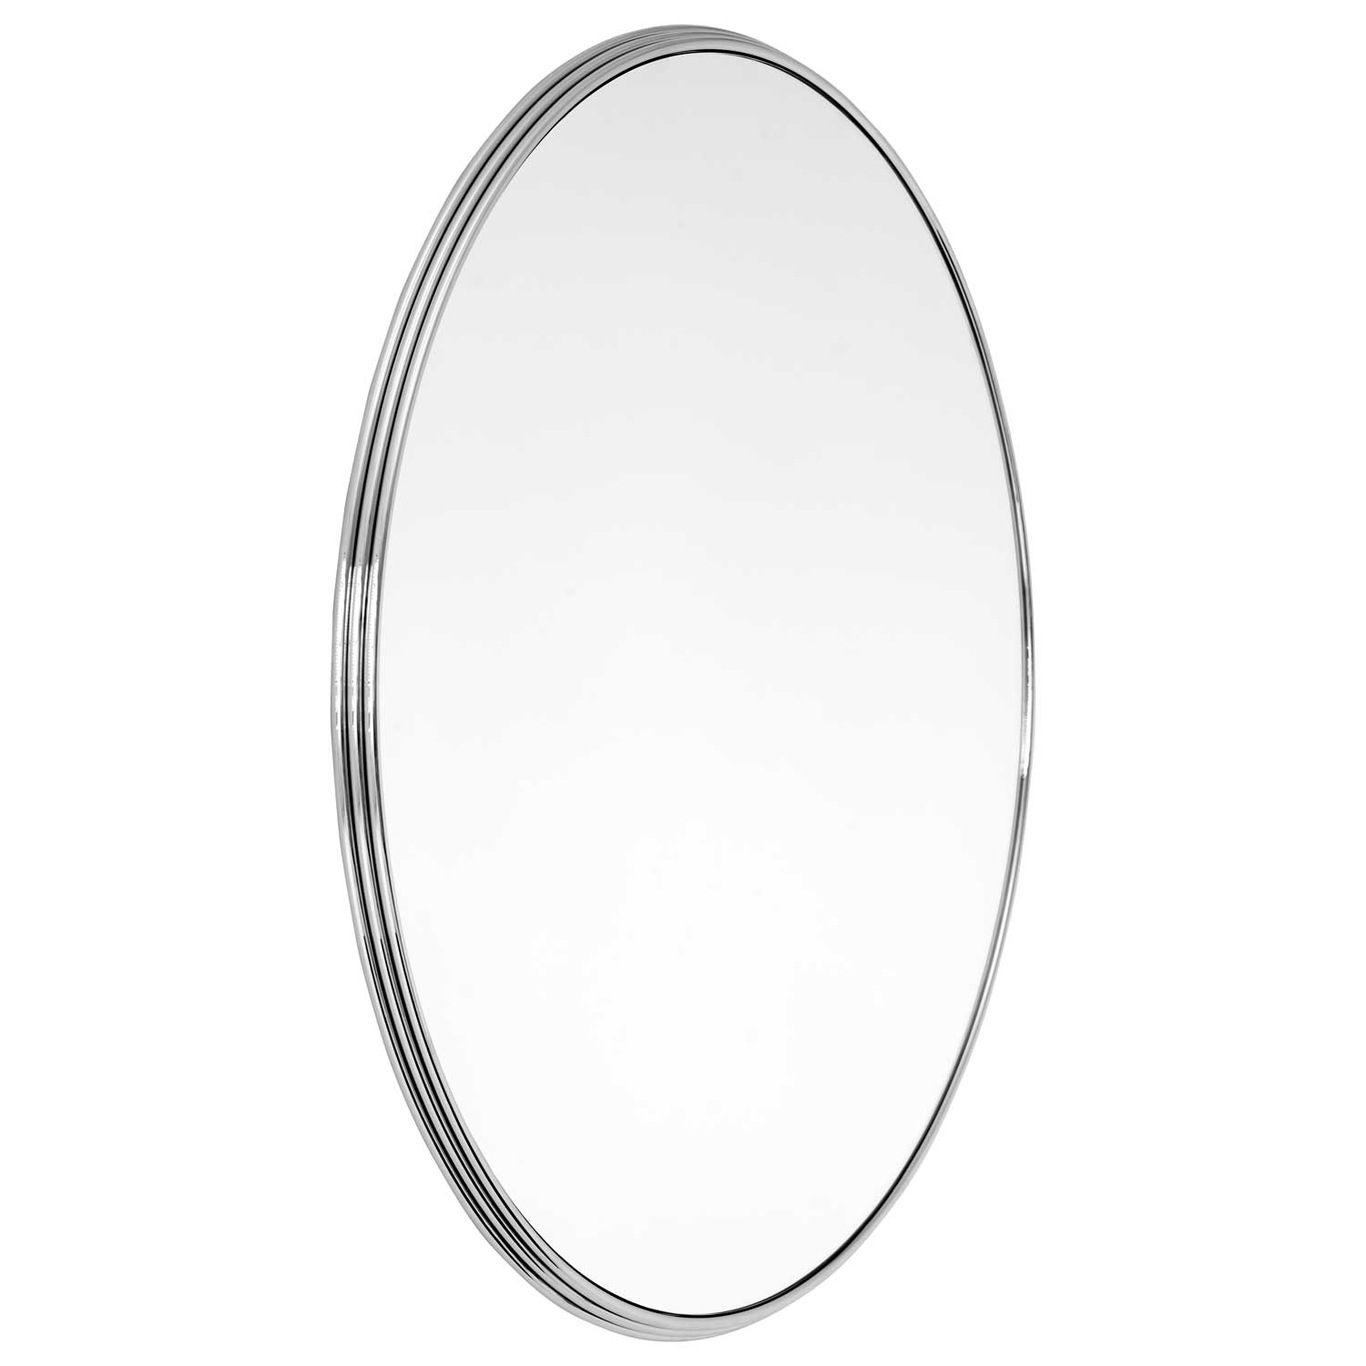 Sillon Mirror SH6 Ø96 cm, Stainless Steel